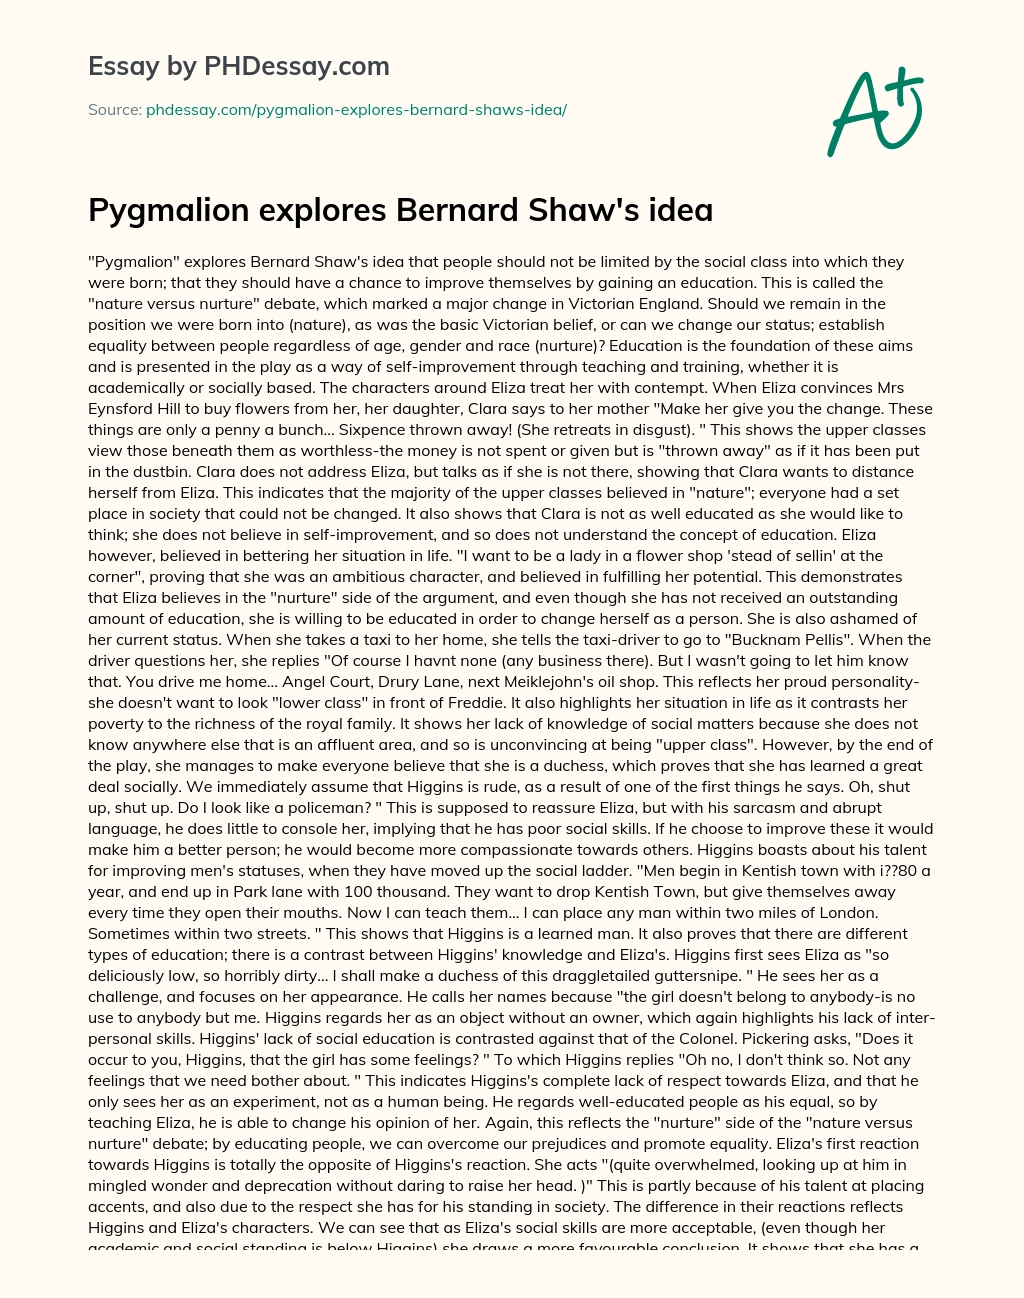 Pygmalion explores Bernard Shaw’s idea essay